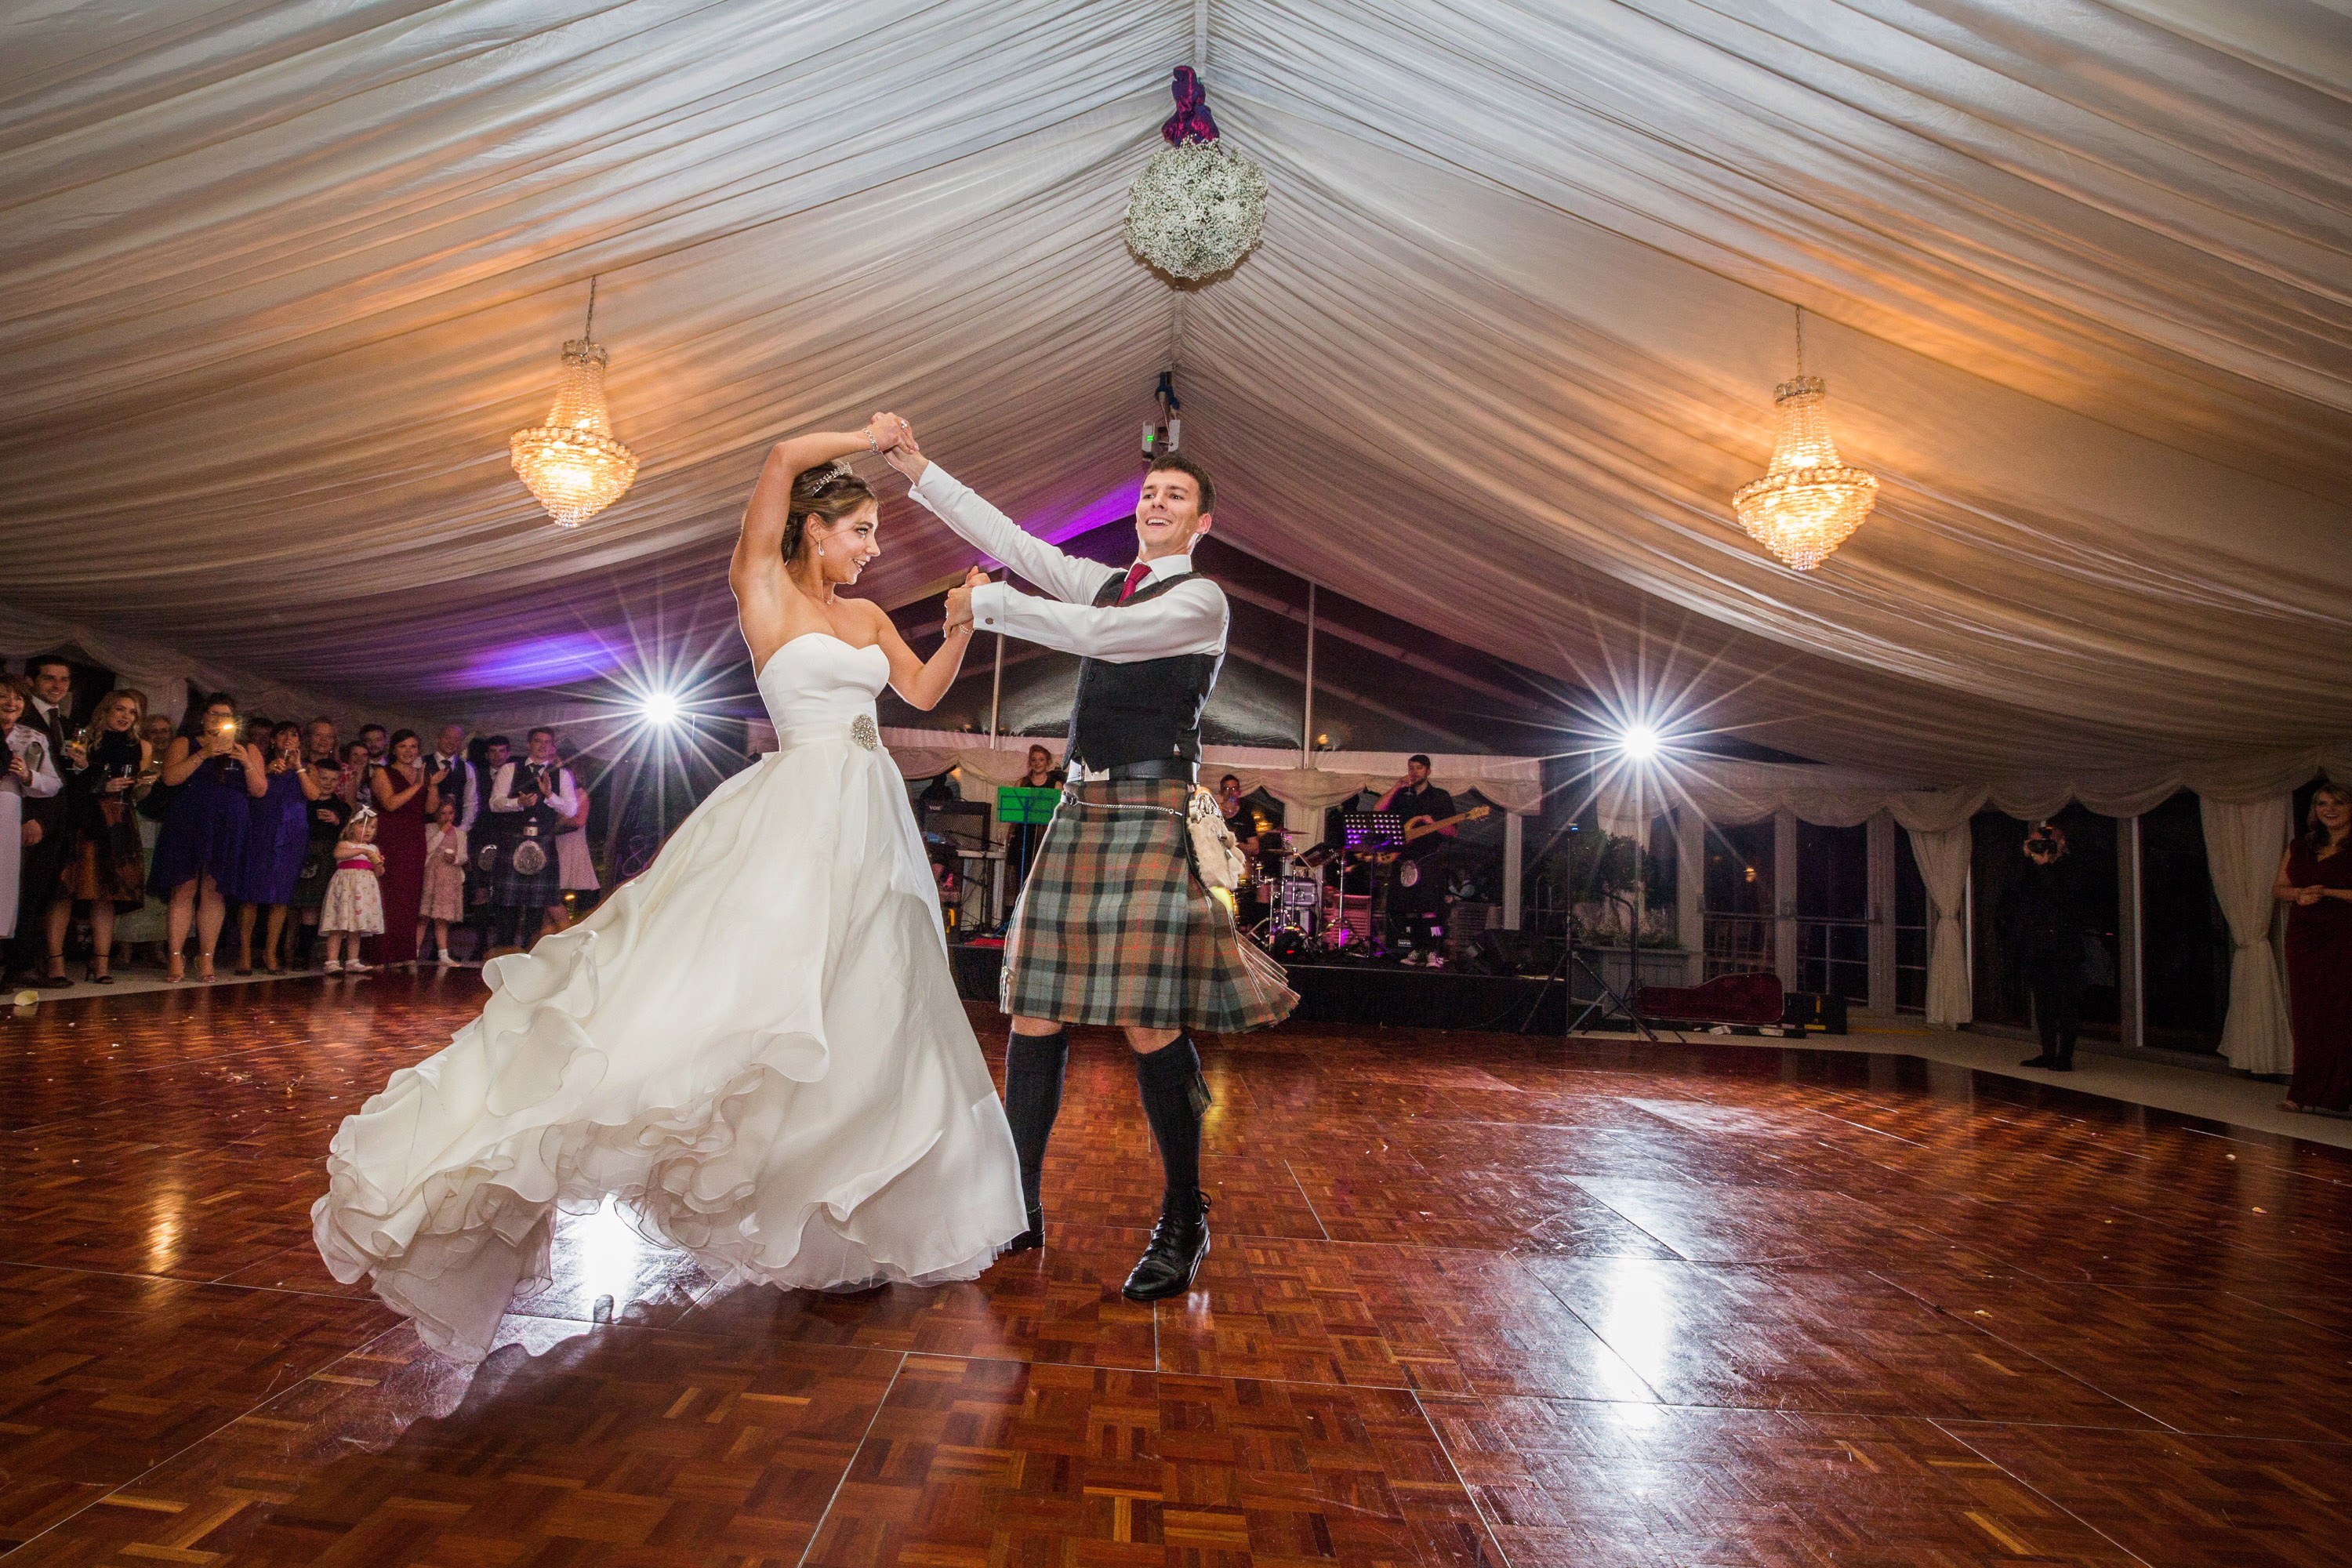 A candid photograph taken at a wedding in Aberdeen by Jonathan Addie, an Aberdeen based wedding photographer